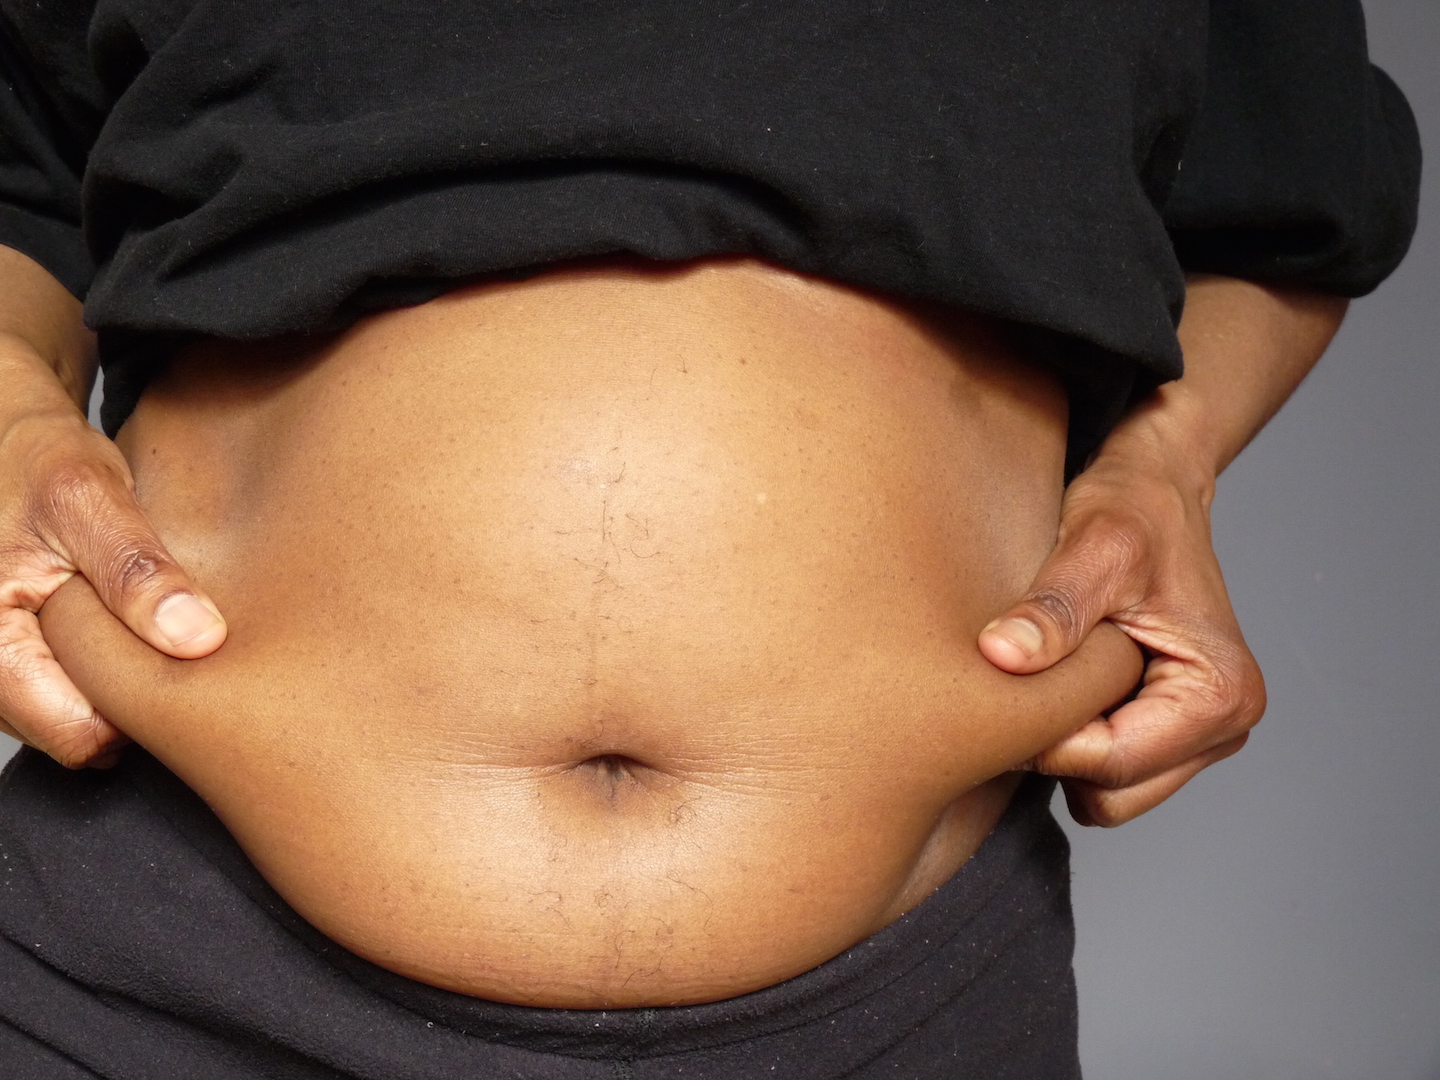 Fat-Shaming is a ‘Legitimate Public Health Issue’